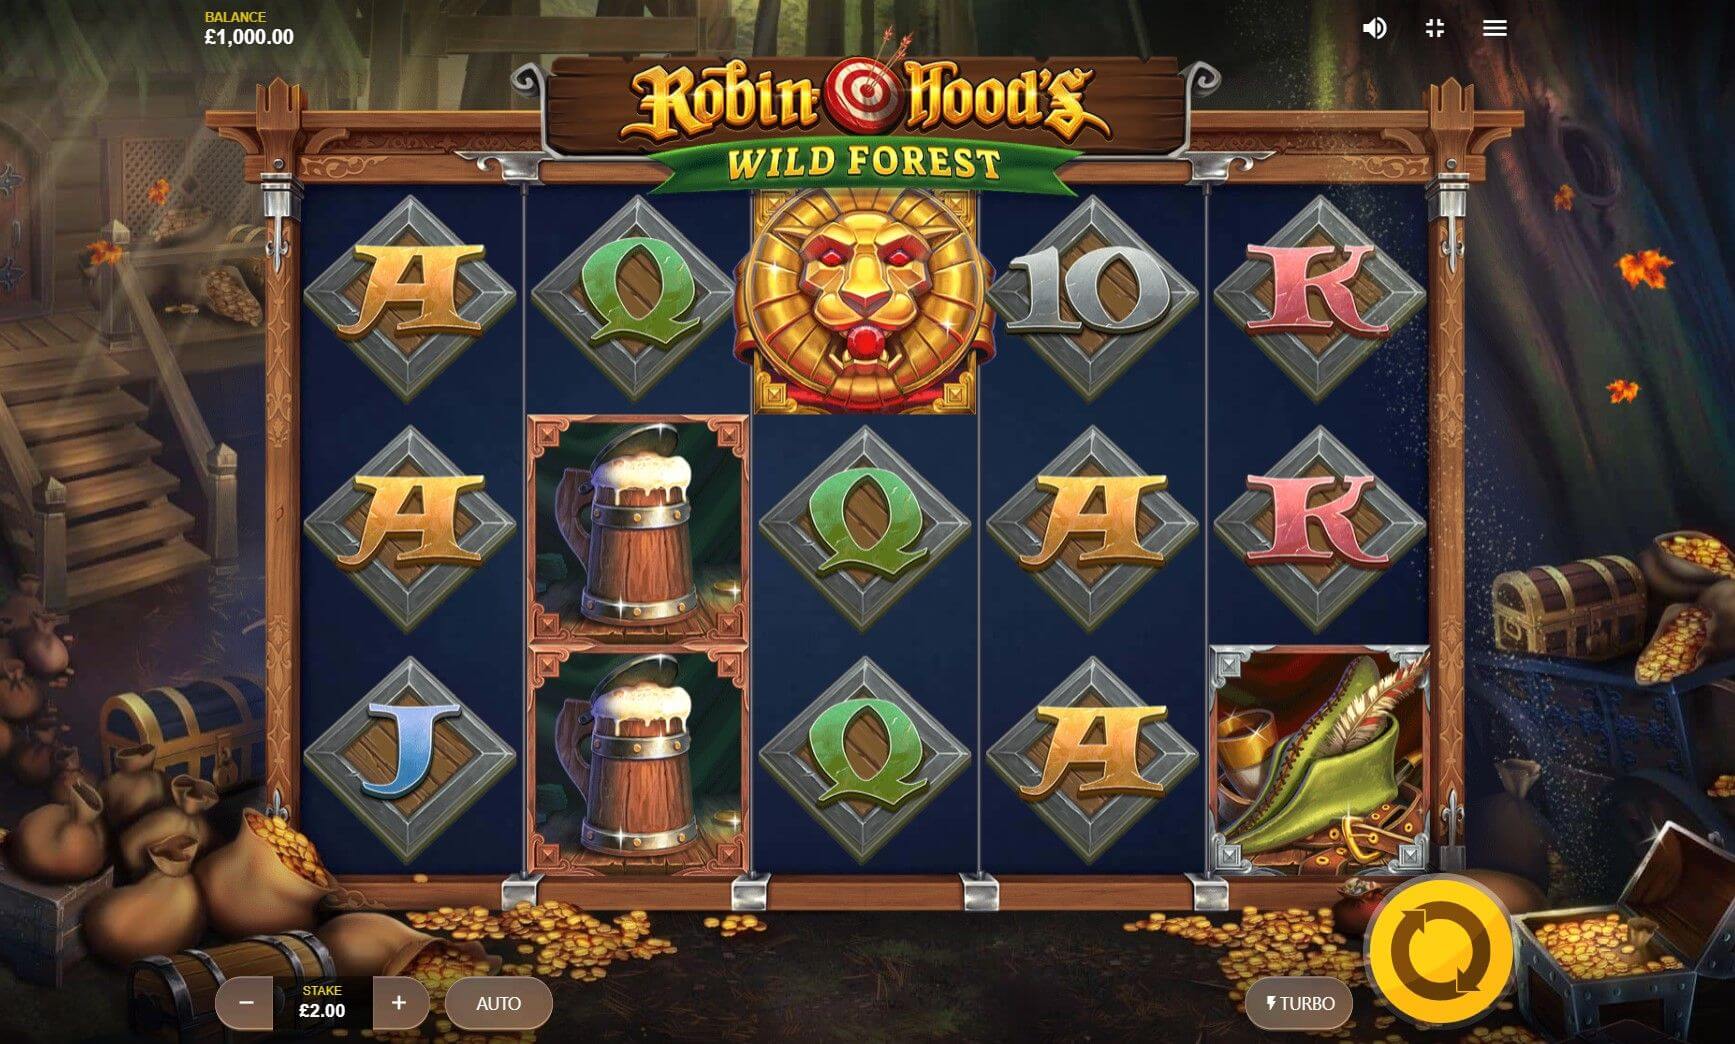 Robin Hood Slot Gameplay